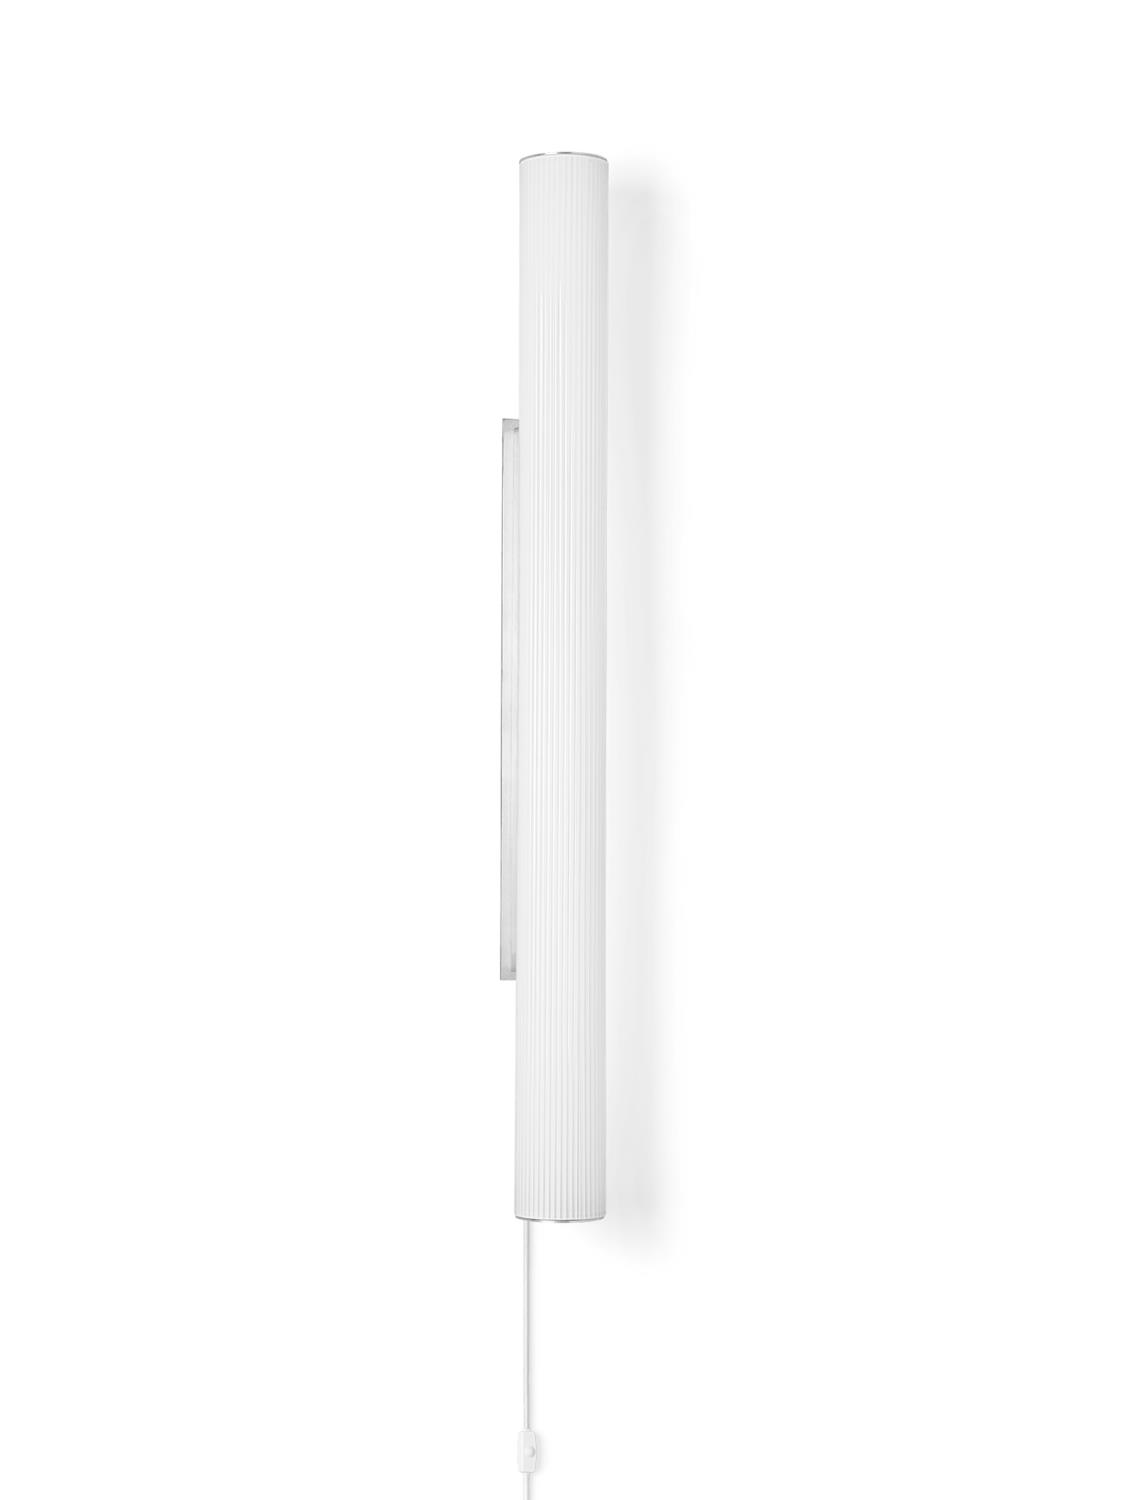 Ferm Living - Vuelta Wall Lamp 100 - White Stainless Steel